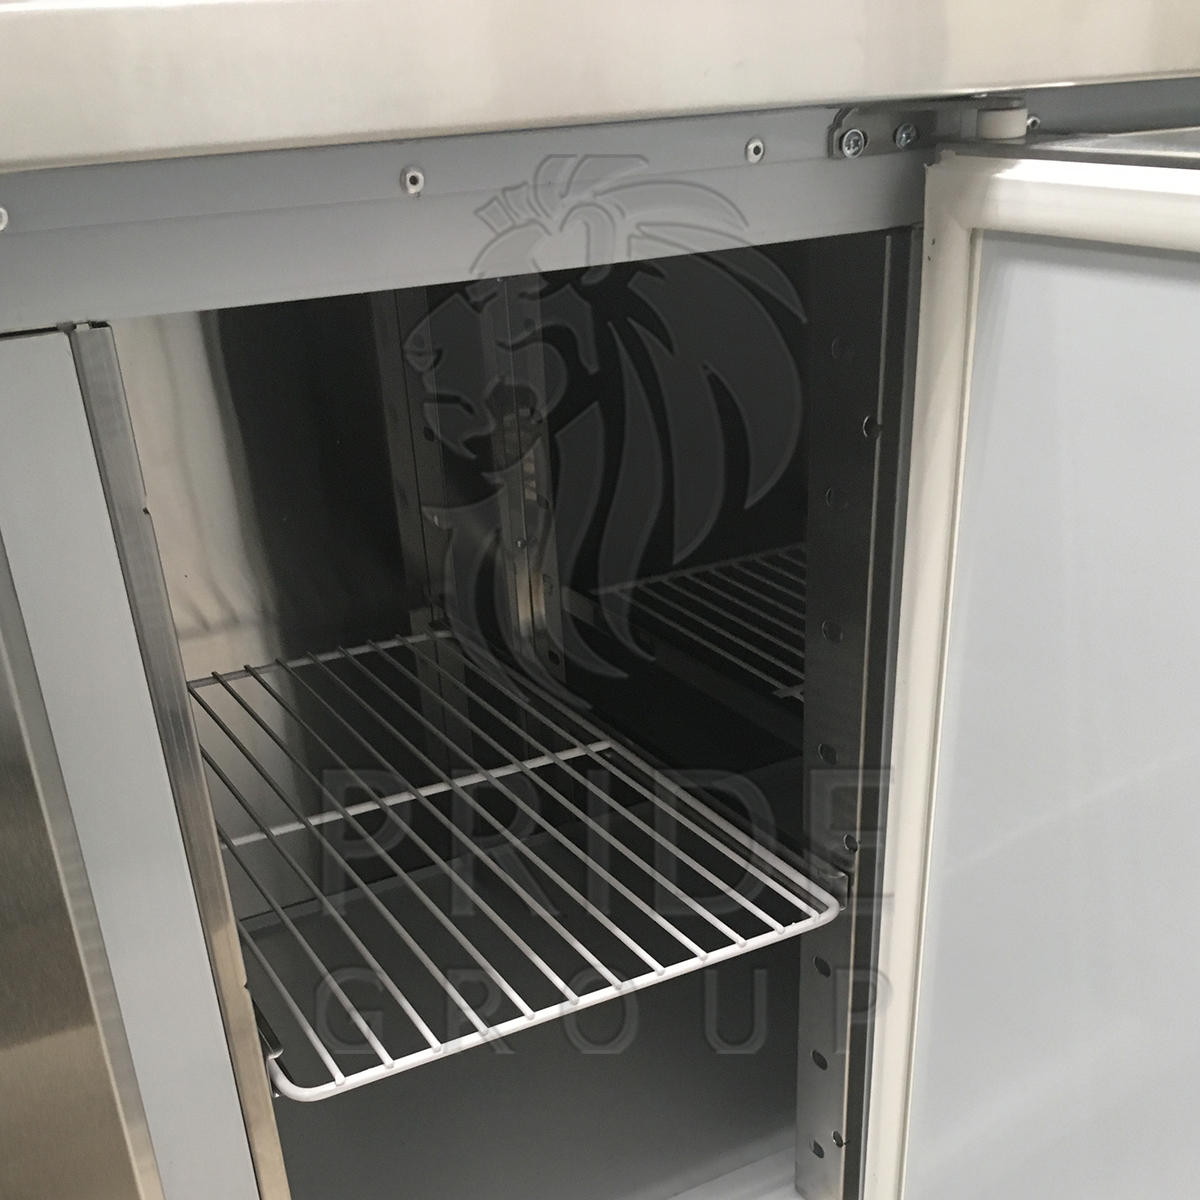 картинка Стол холодильный для пиццы Finist СХСнпц-700-2 нижний агрегат 1000х700х850 мм